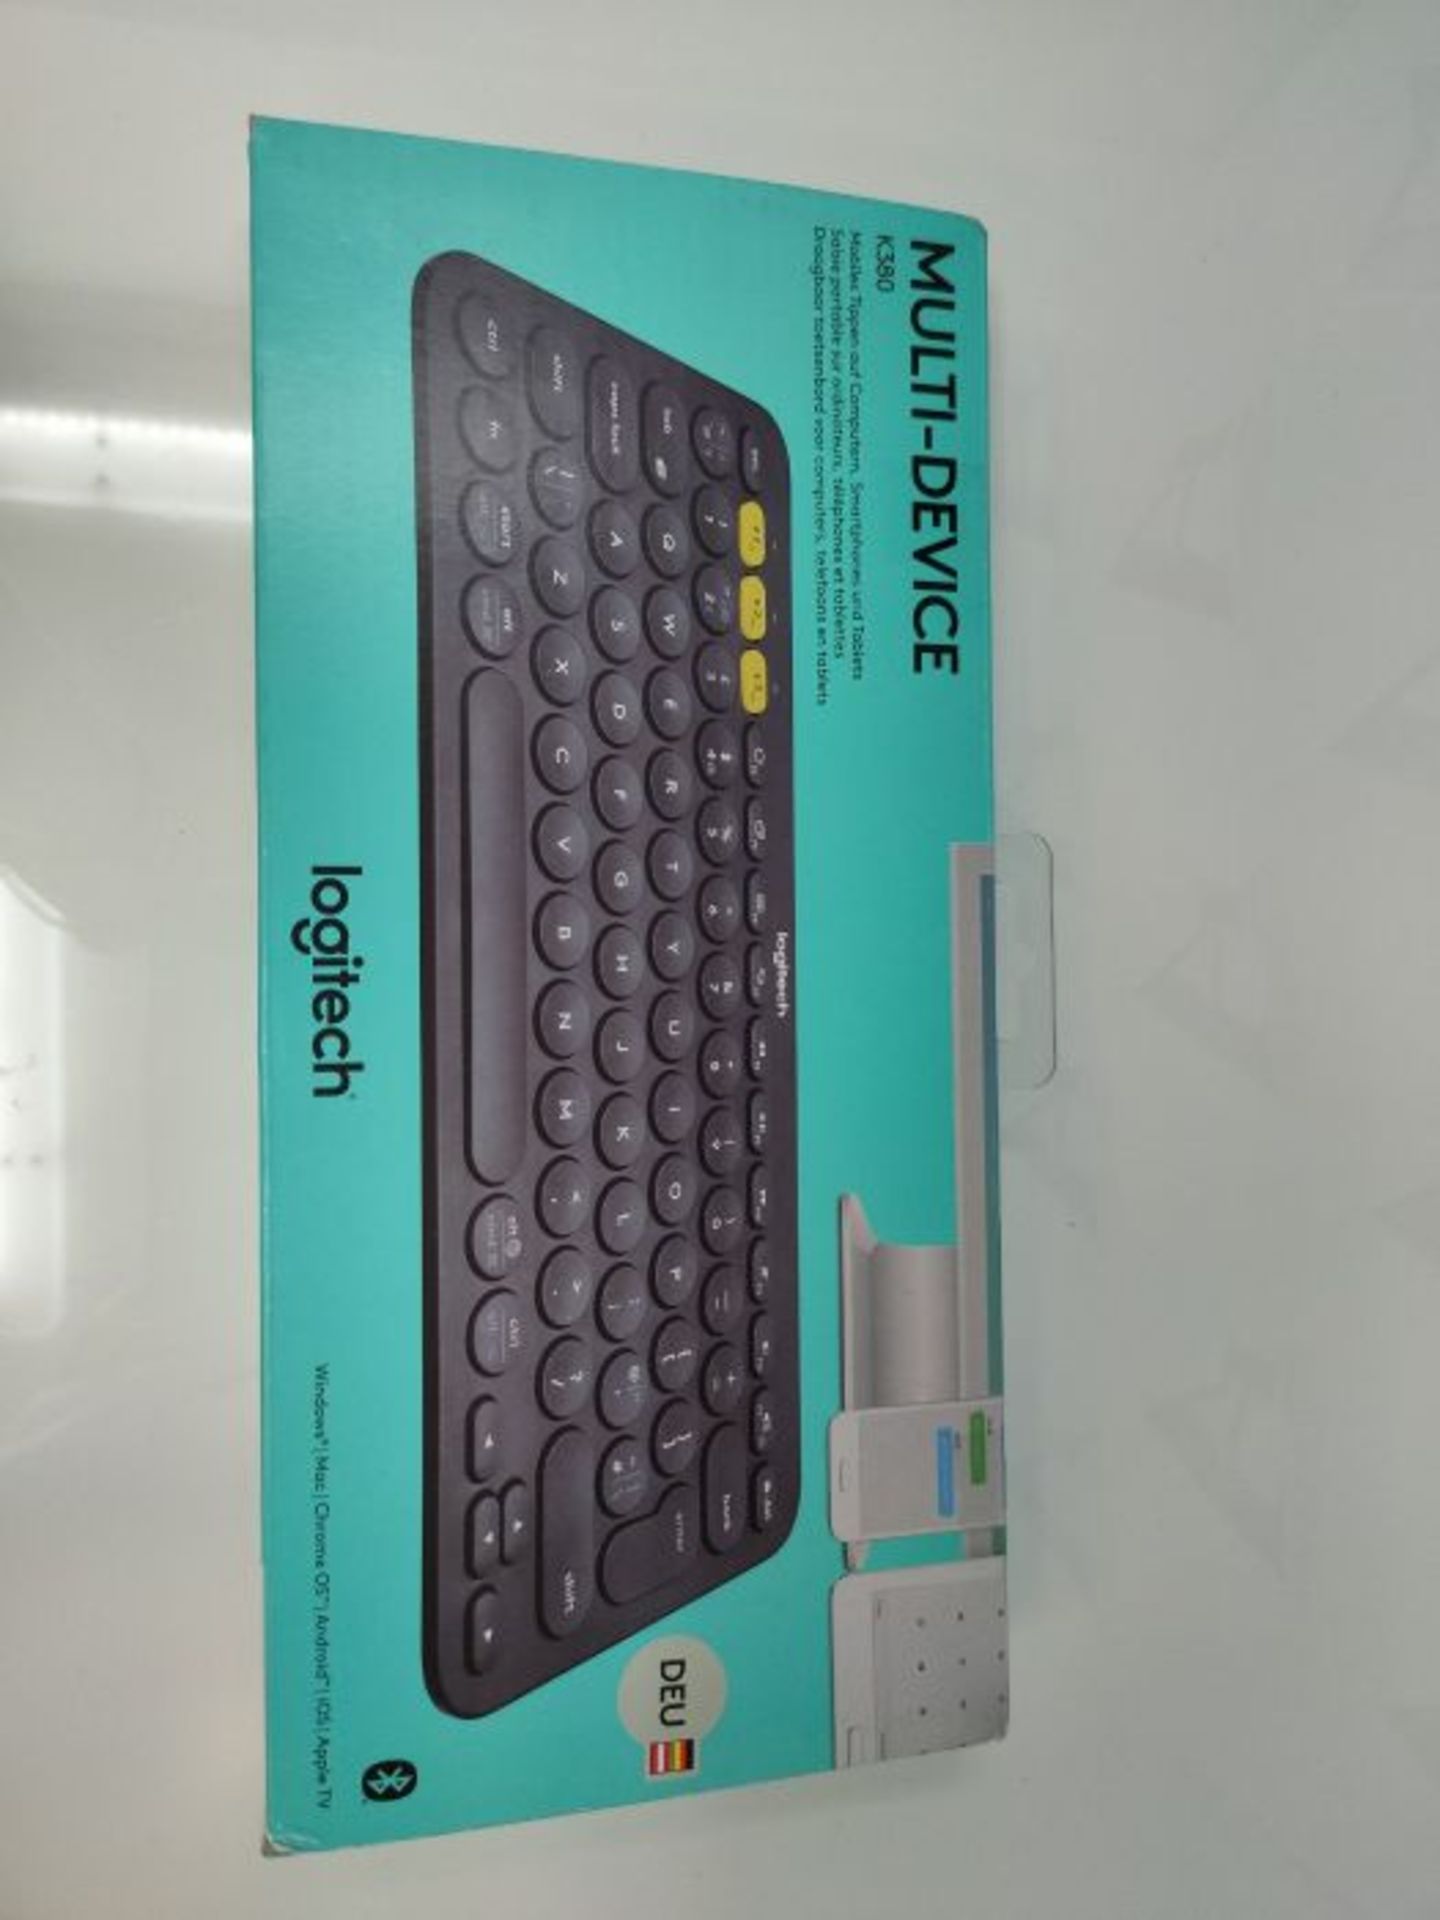 Logitech K380 Wireless Multi-Device Keyboard, QWERTZ German Layout - Black - Image 2 of 3